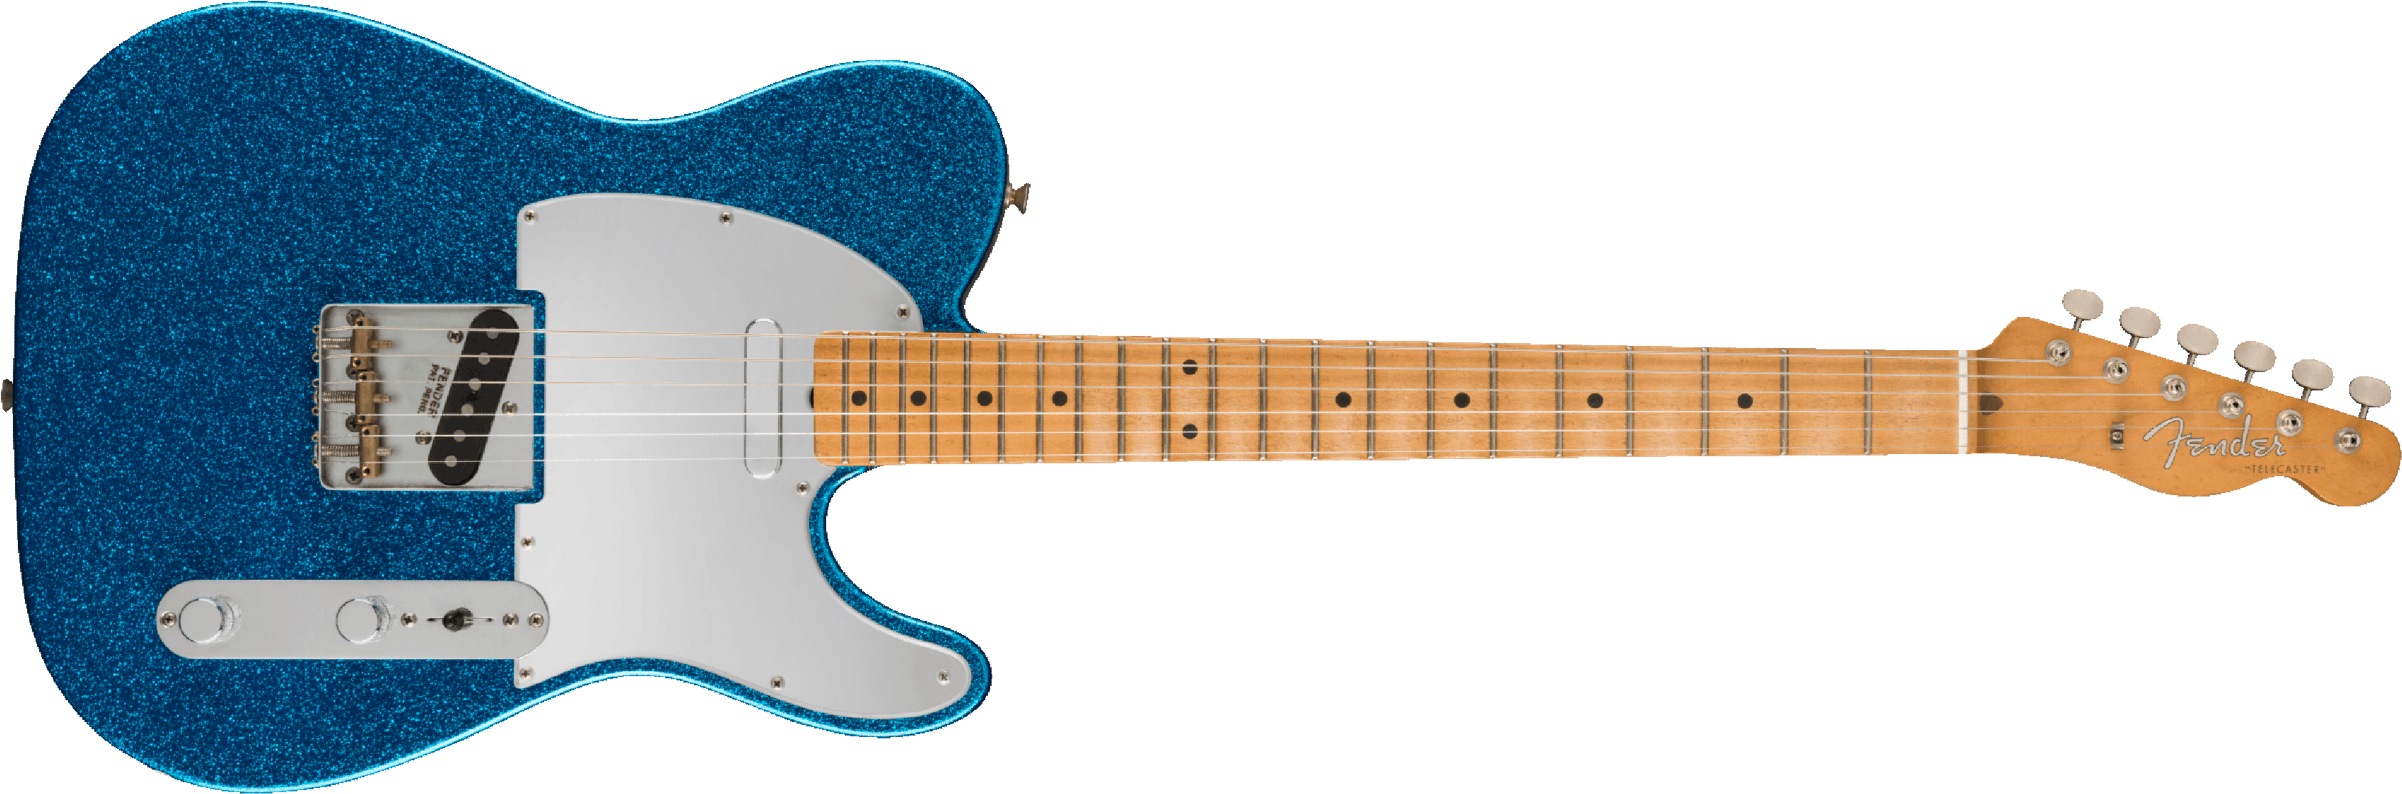 Fender Telecaster J. Mascis Signature 2s Ht Mn - Sparkle Blue - Guitarra eléctrica con forma de tel - Main picture